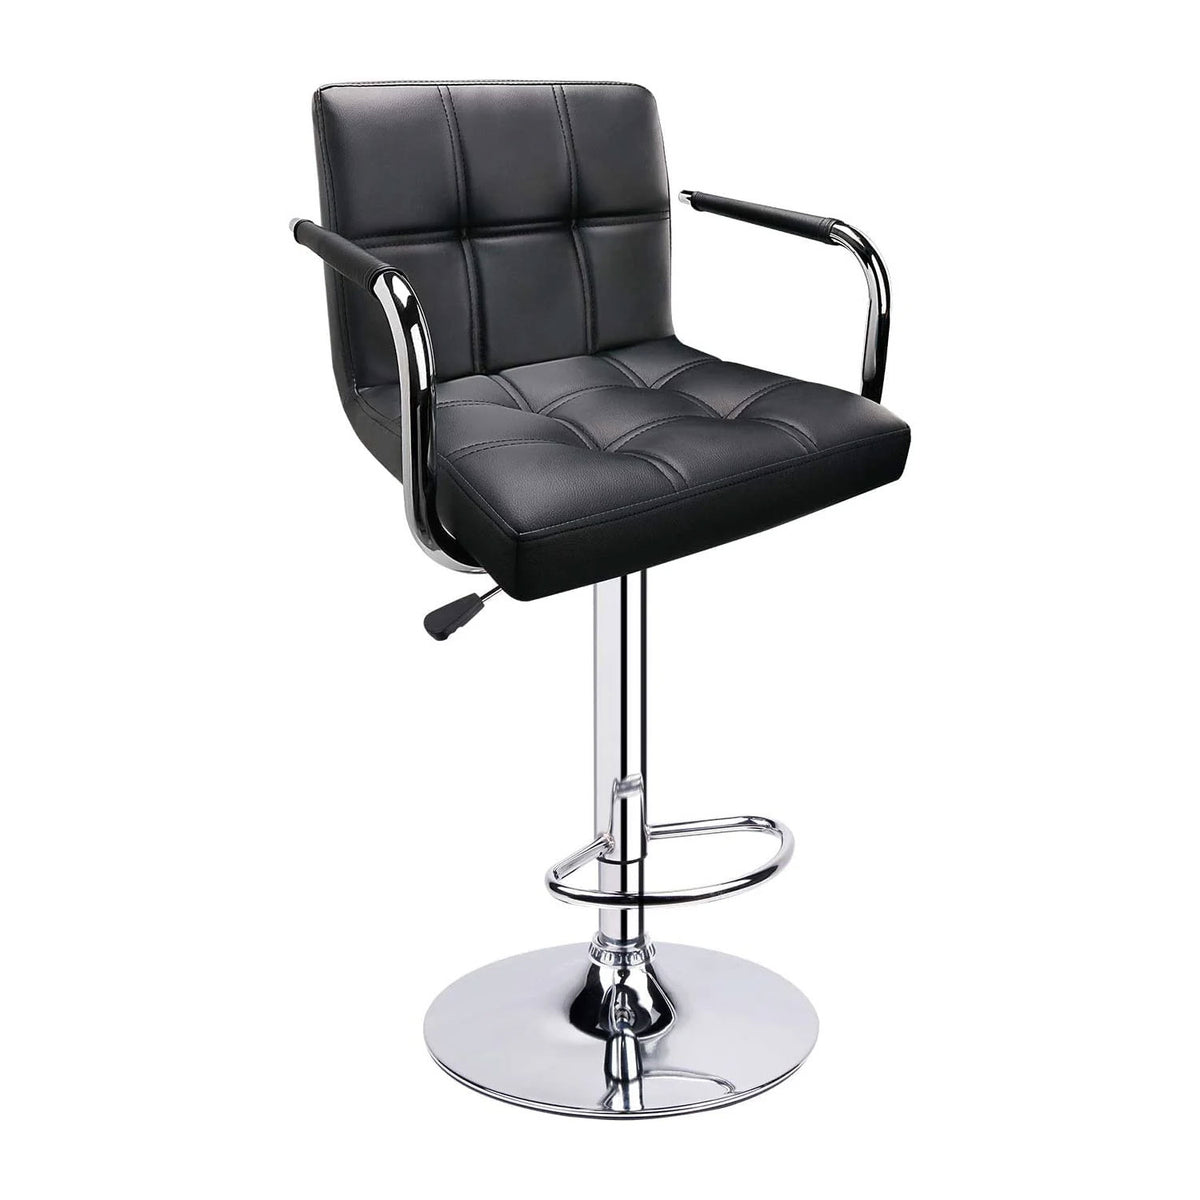 SmileSellers Revolving Swivel Bar Stool Chair| Revolving | Height Adjustable |Kitchen | Café |Store | Leatherette Bar Chair(Black)